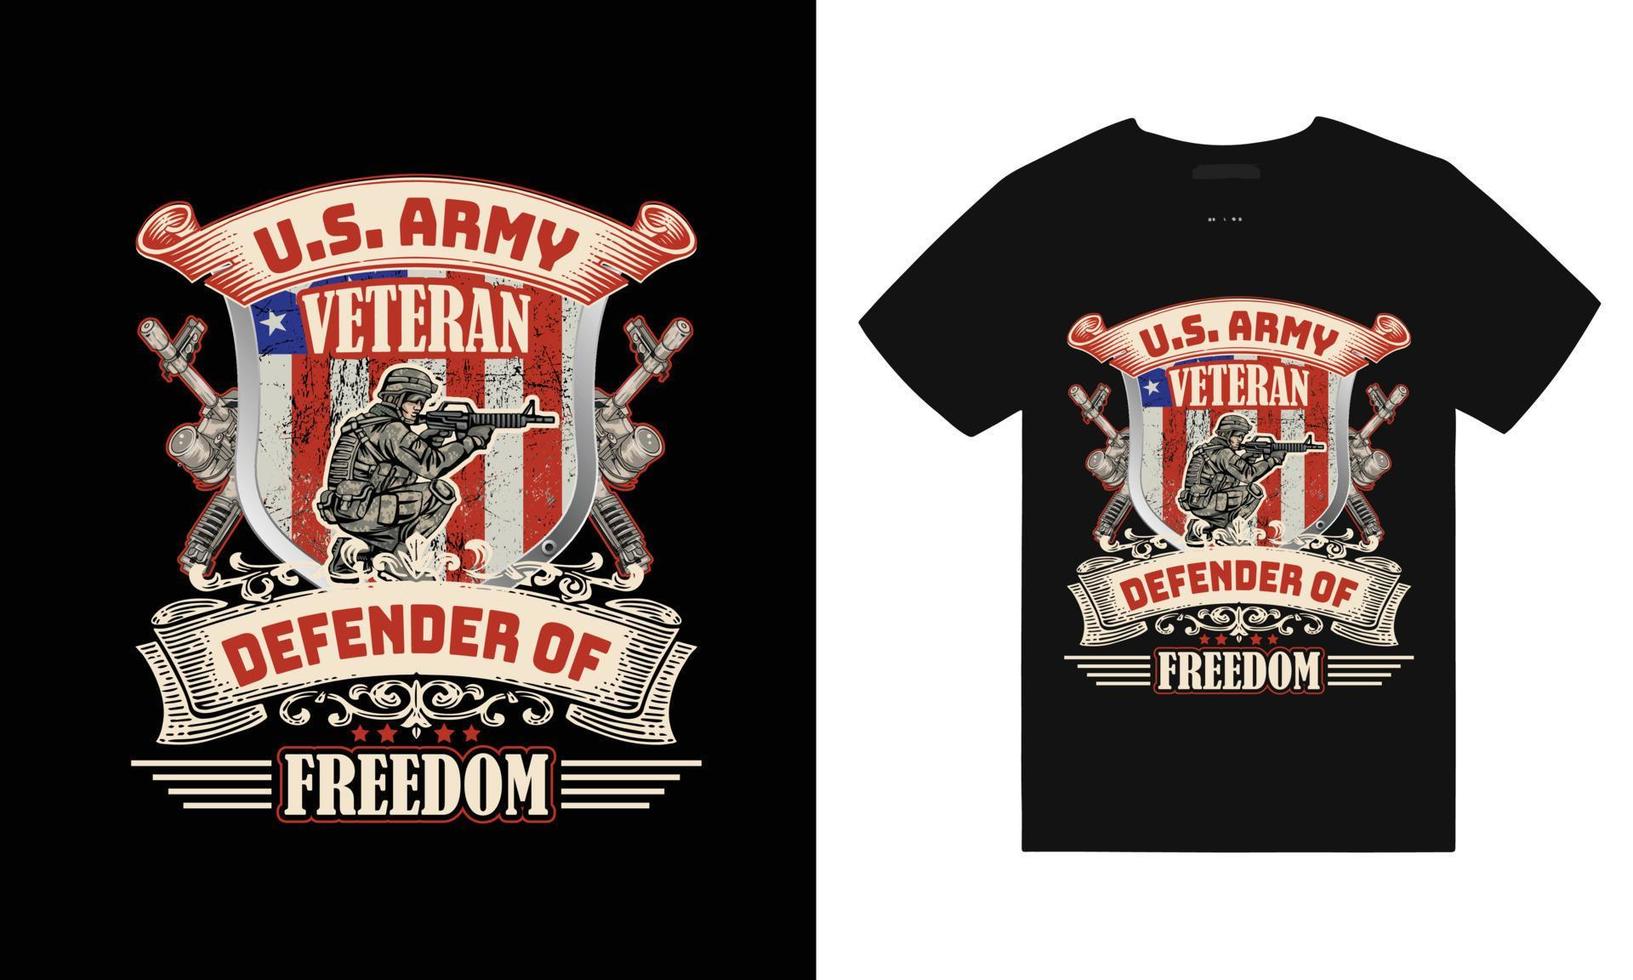 US ARMY t shirt design veteran t shirt Military veteran t shirt design and Army Soldier t shirt design vector